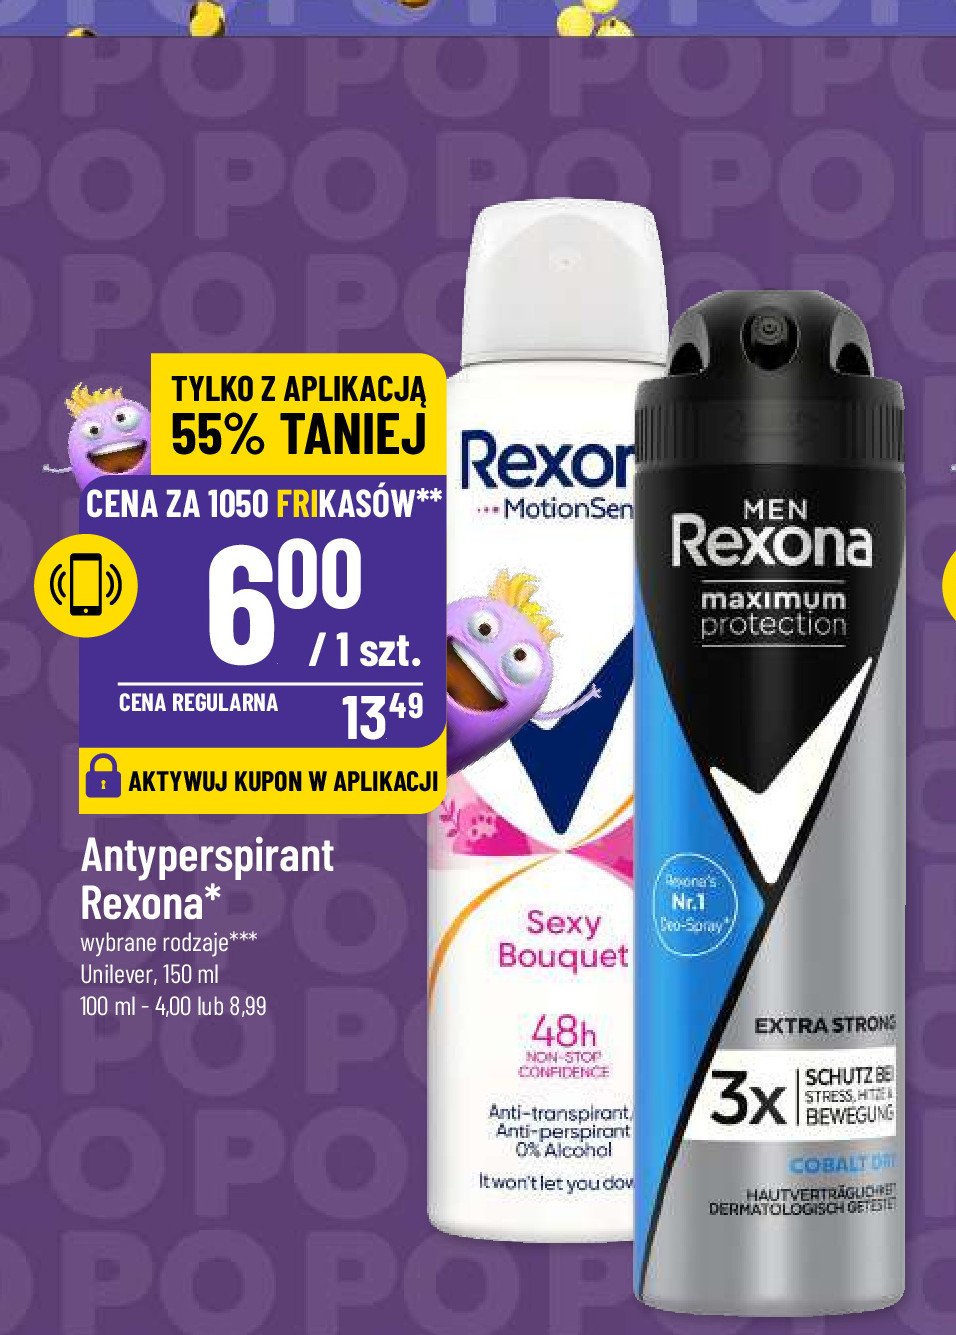 Dezodorant cobalt dry REXONA MEN MAXIMUM PROTECTION promocja